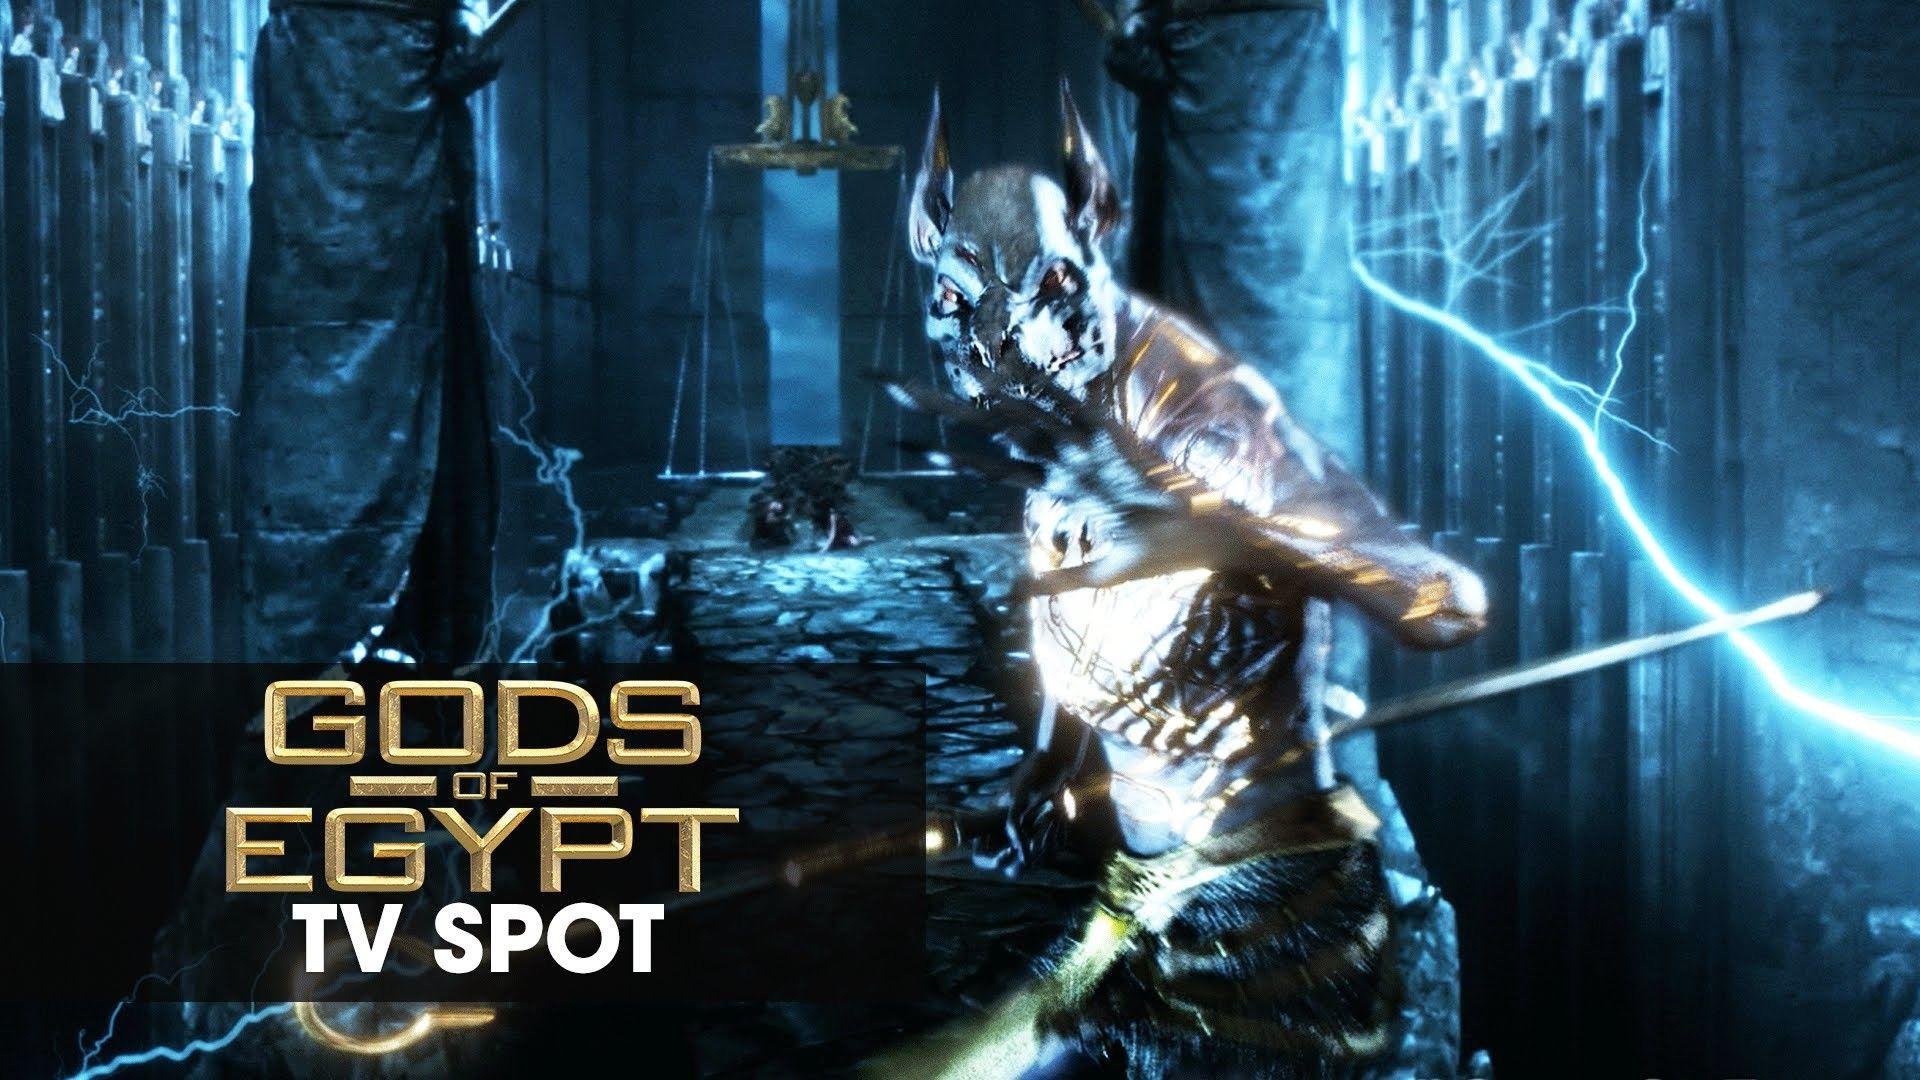 Gods of egypt 2 full movie free download Gods of Egypt 2016 Hindi